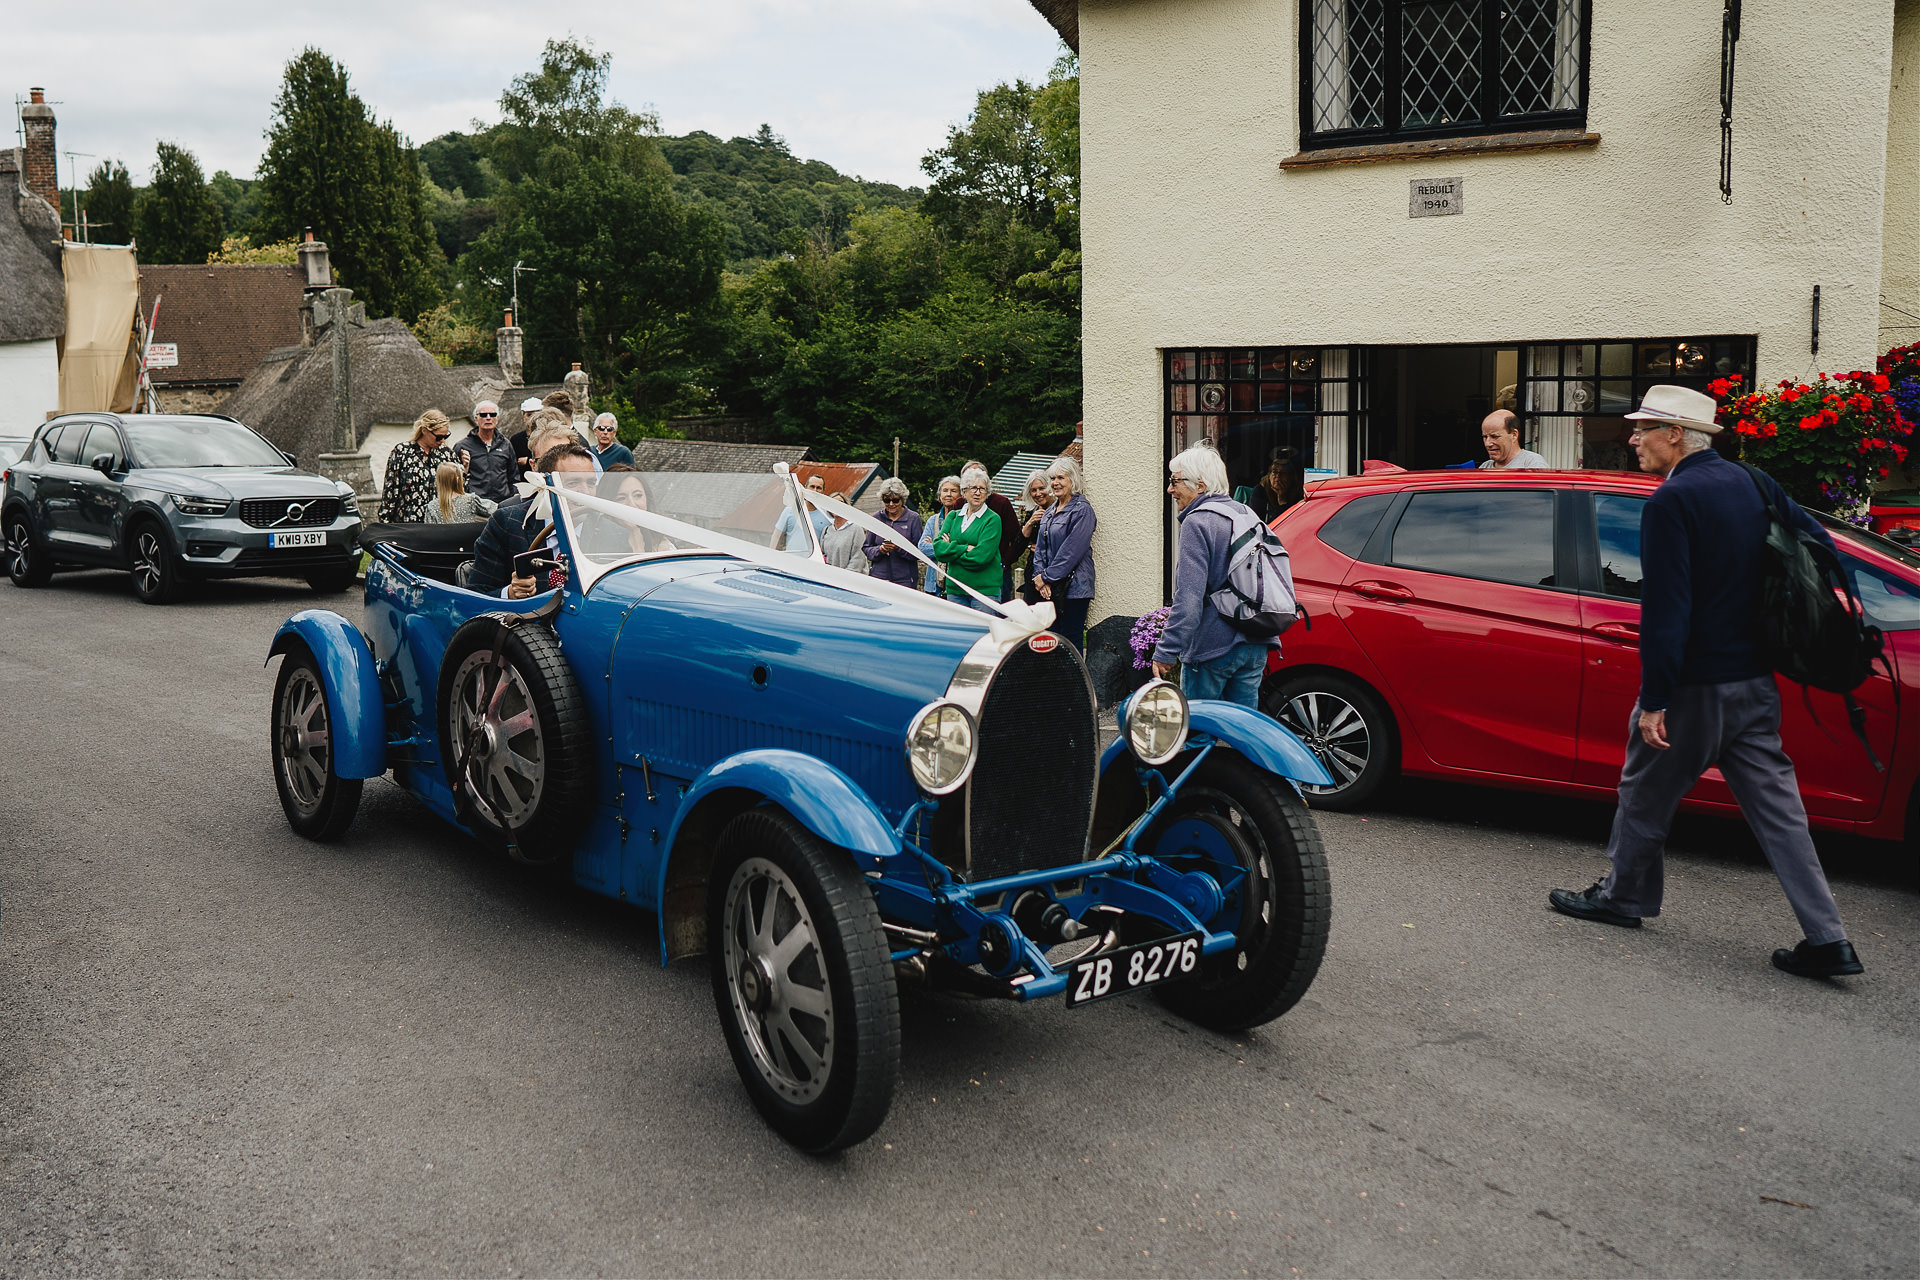 Bride arriving along a village street in an incredible vintage blue car